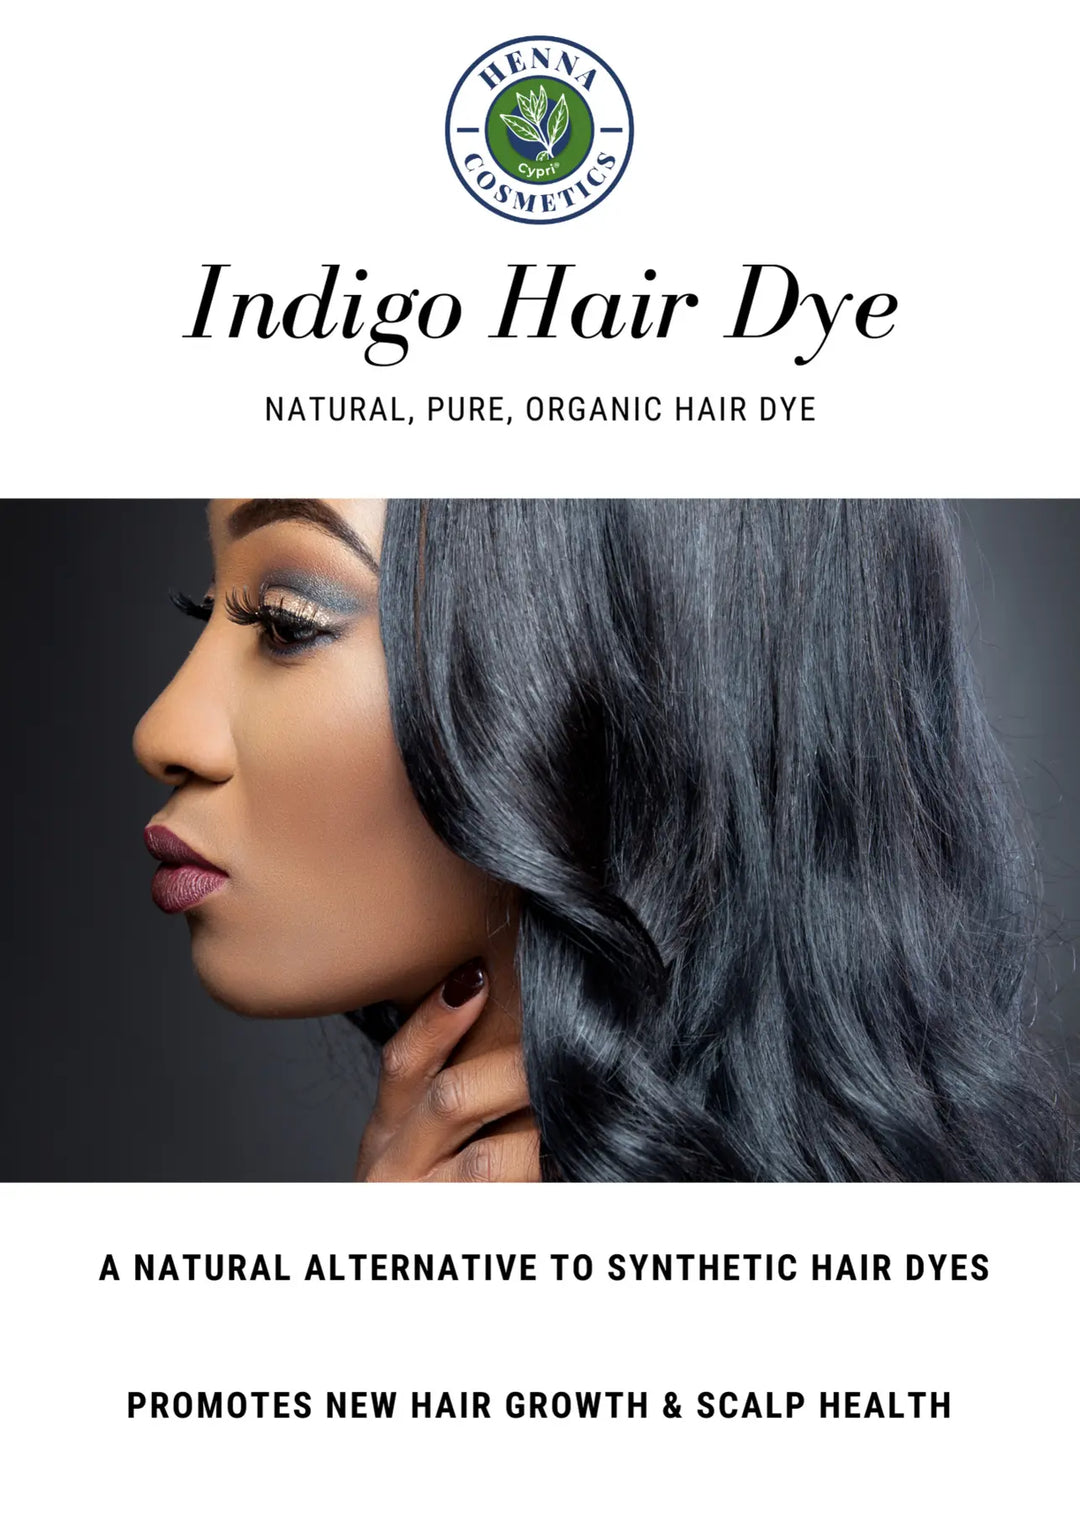 Pure Henna Powder, Hair Dye 100 Grams + Pure Indigo Powder 100 Grams. (Bundle for Gray Hair)